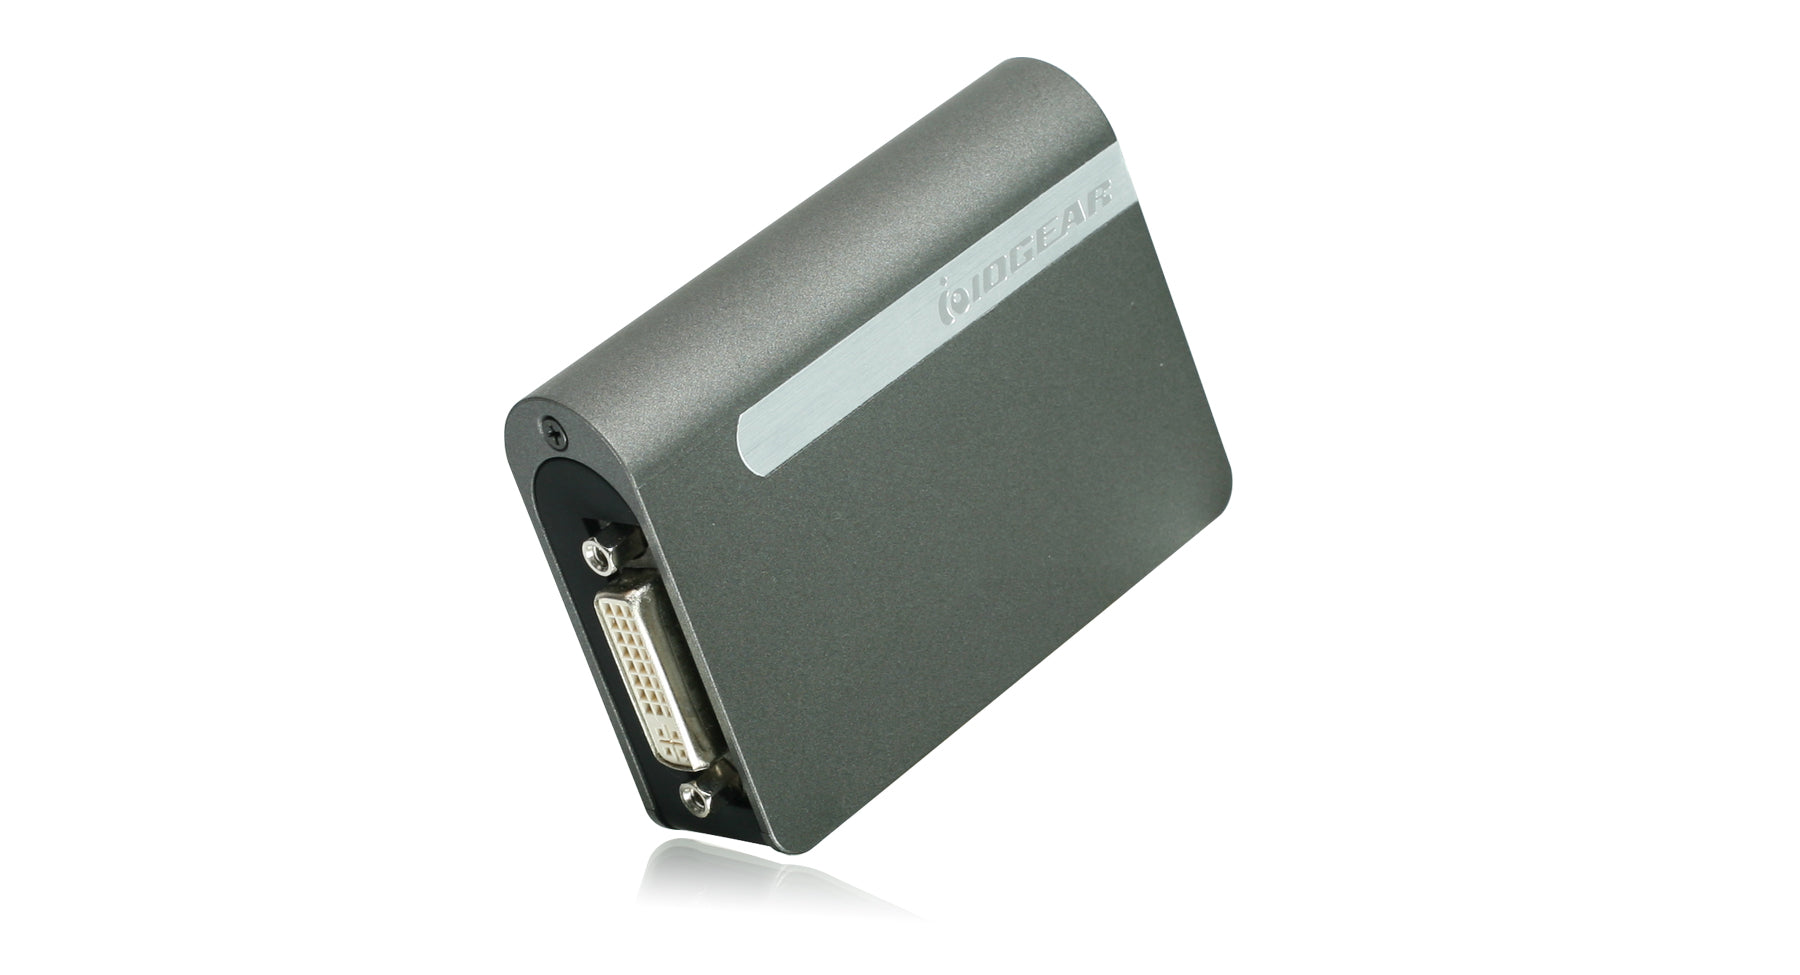 USB 2.0 External DVI Video Card